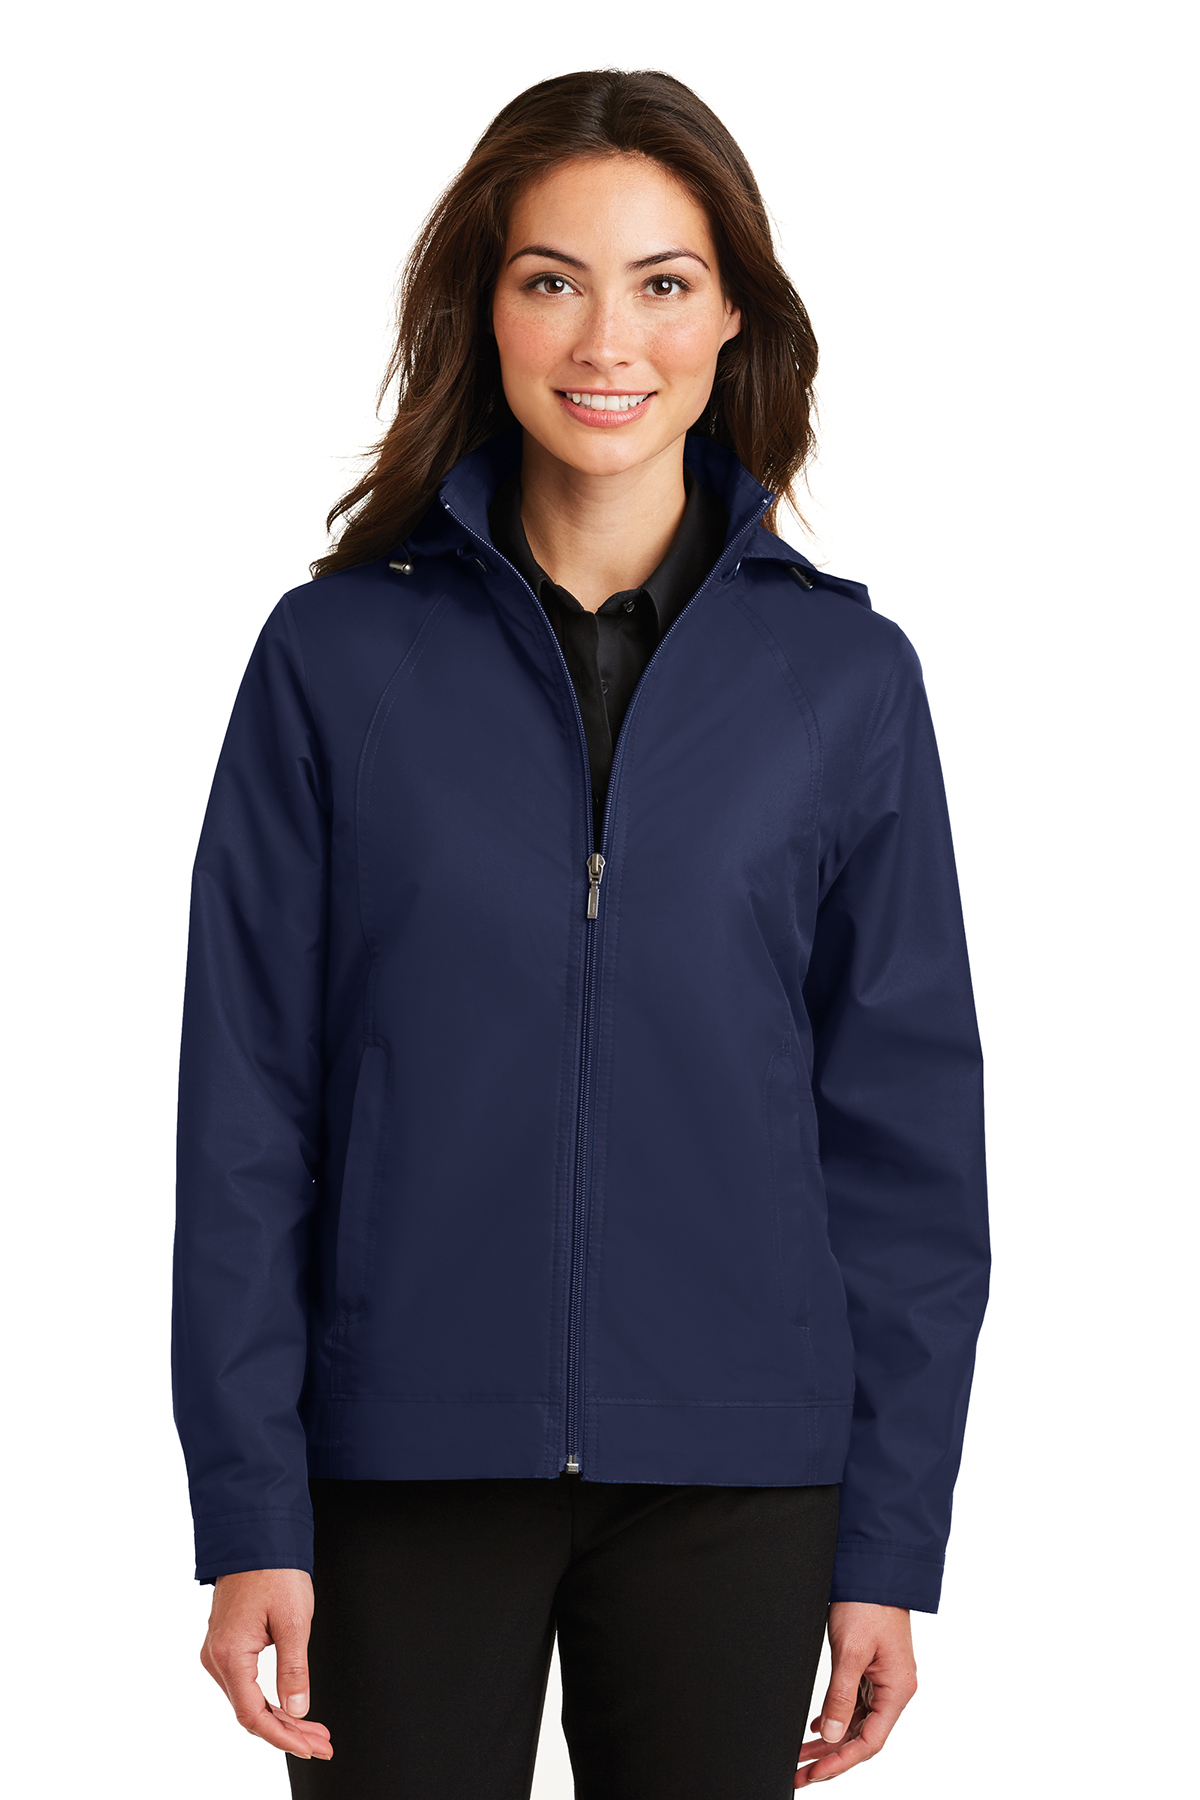 Port Authority Ladies Successor™ Jacket | Product | SanMar